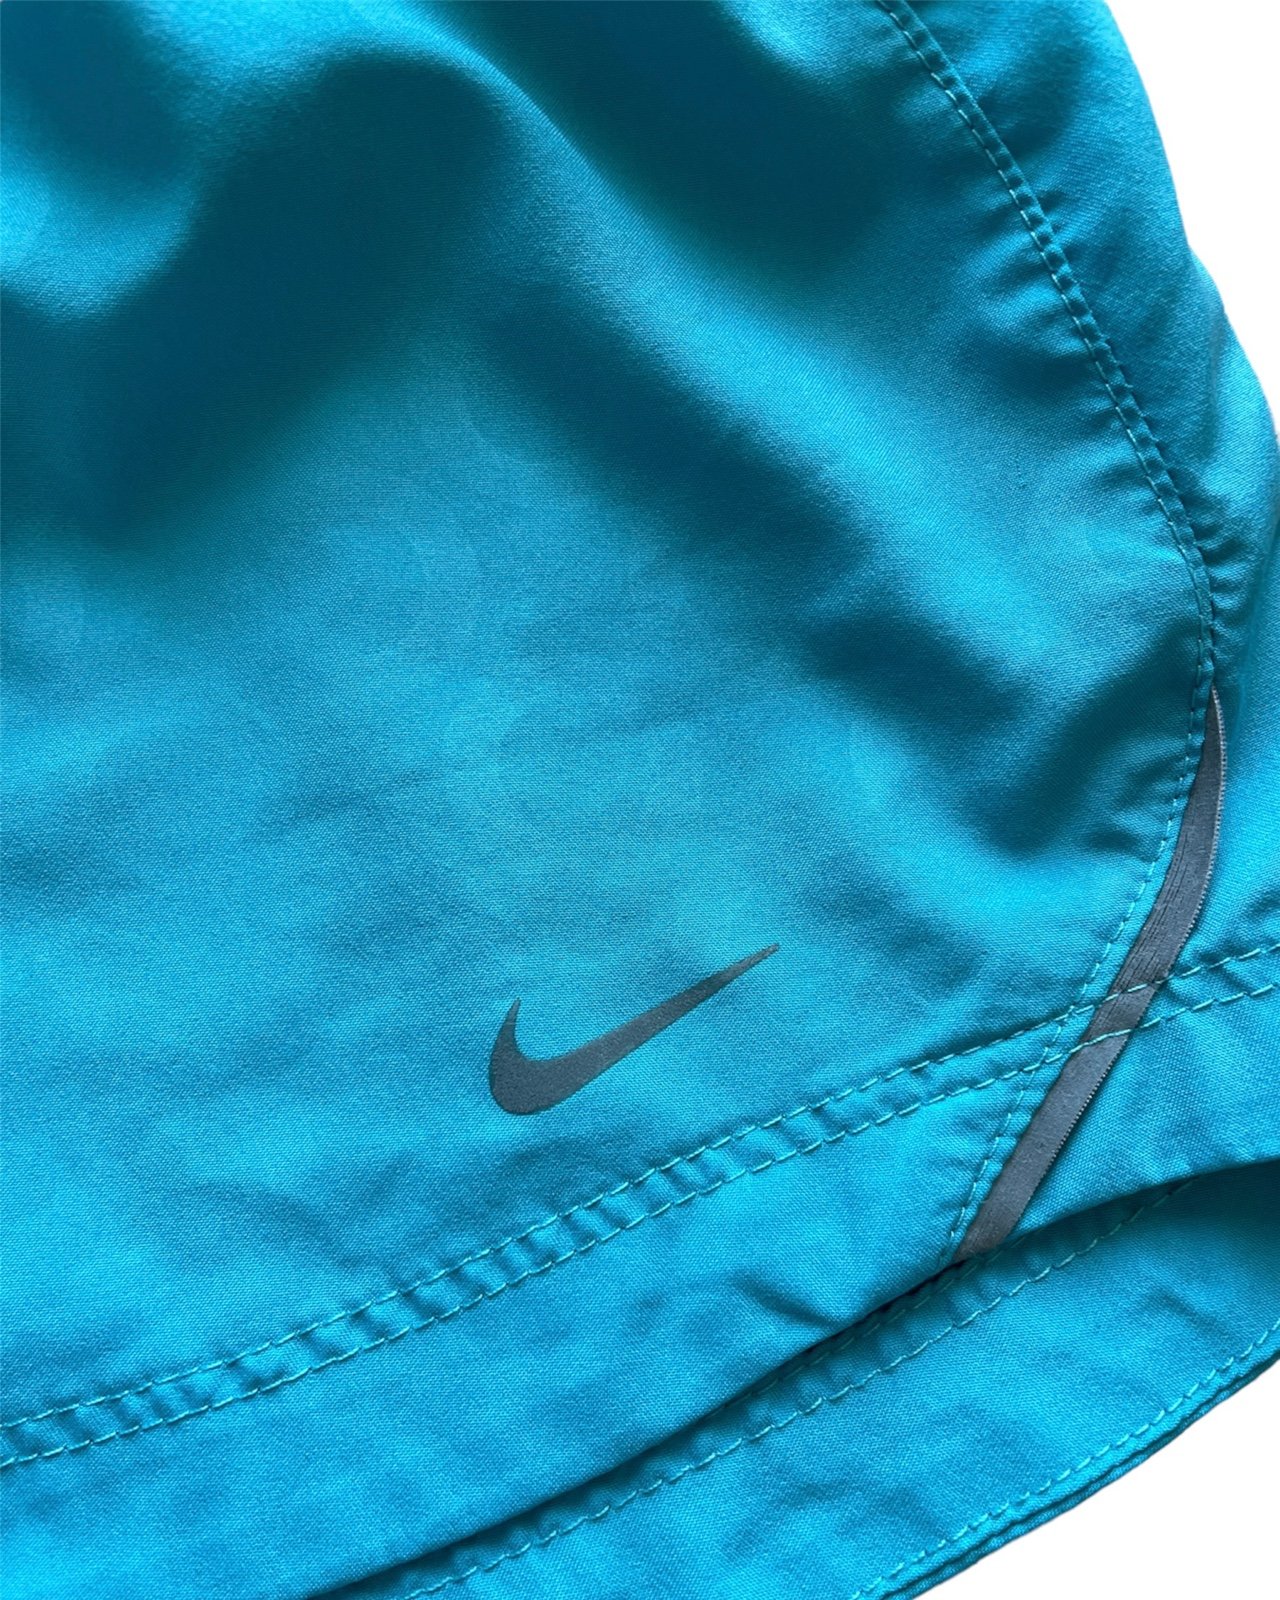 save up to 70% Nike Blue Dri-Fit Athletic Shorts jp22L1JMI Discount